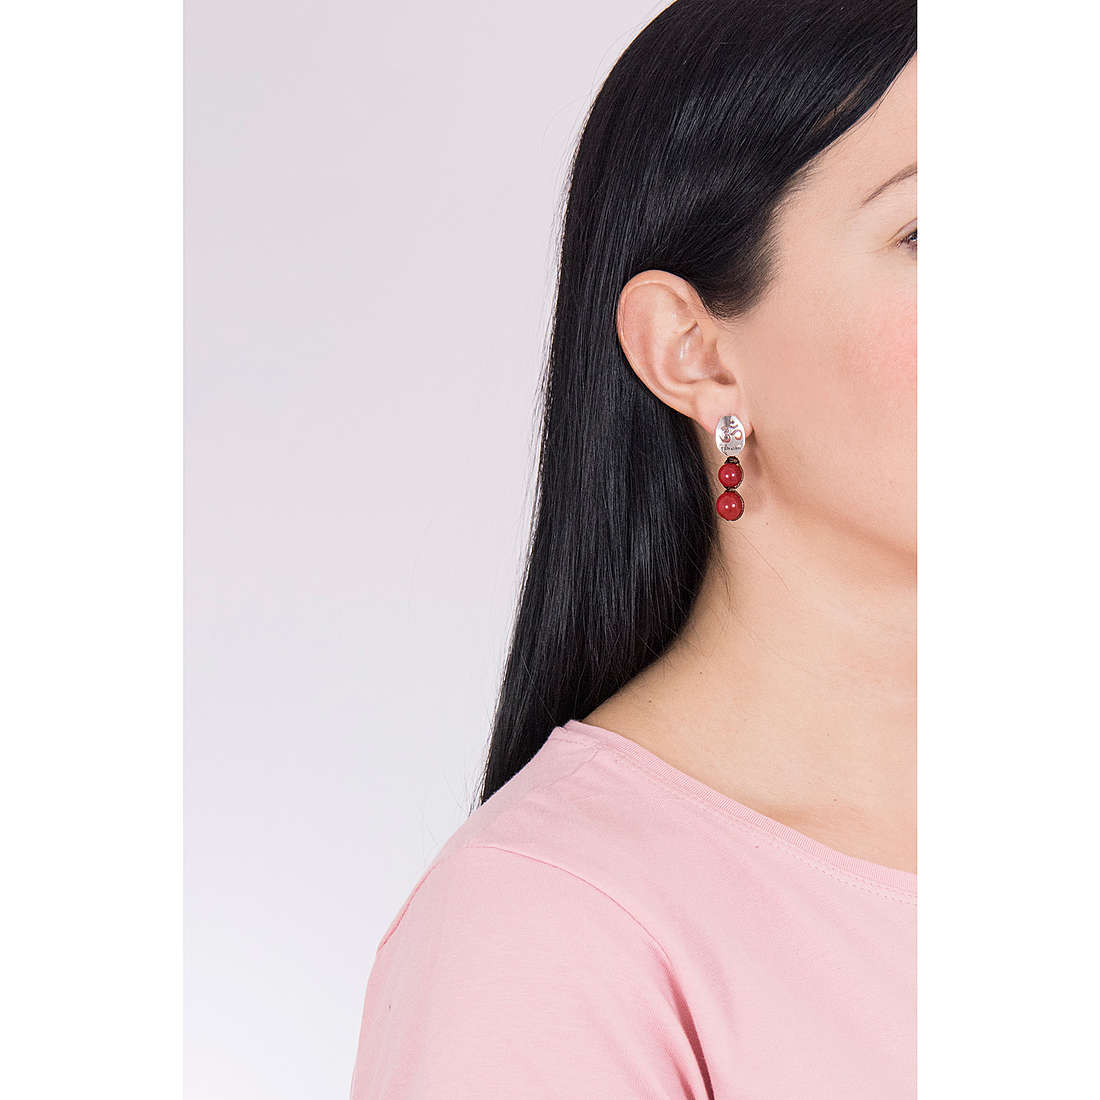 Tamashii orecchini Earrings donna EHST2-124 indosso